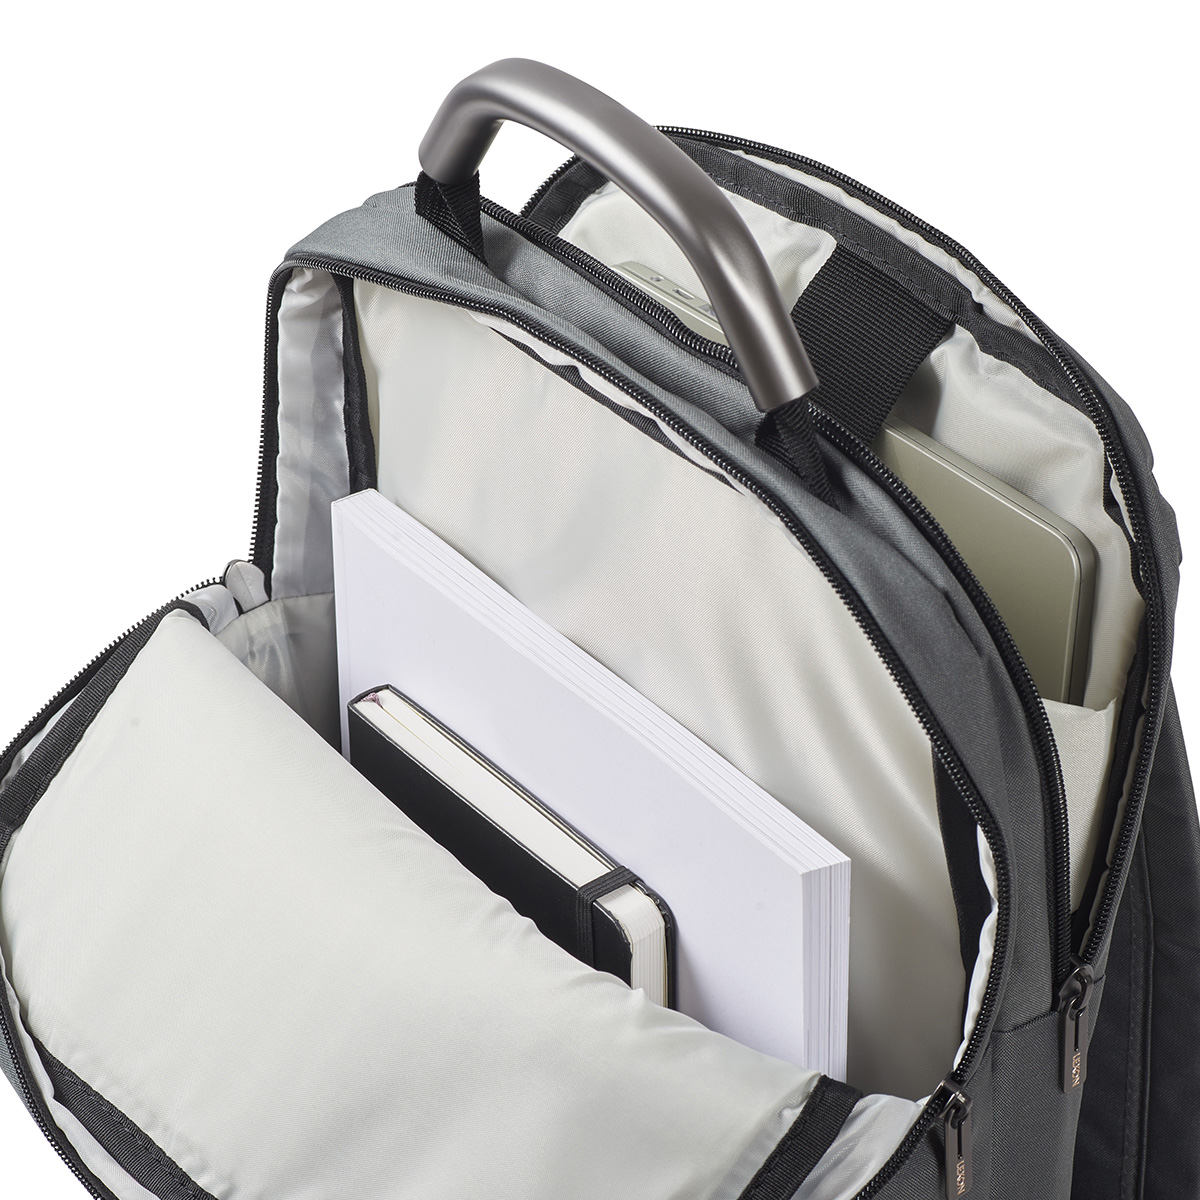 Premium+ Large Laptop Bag - Lexon